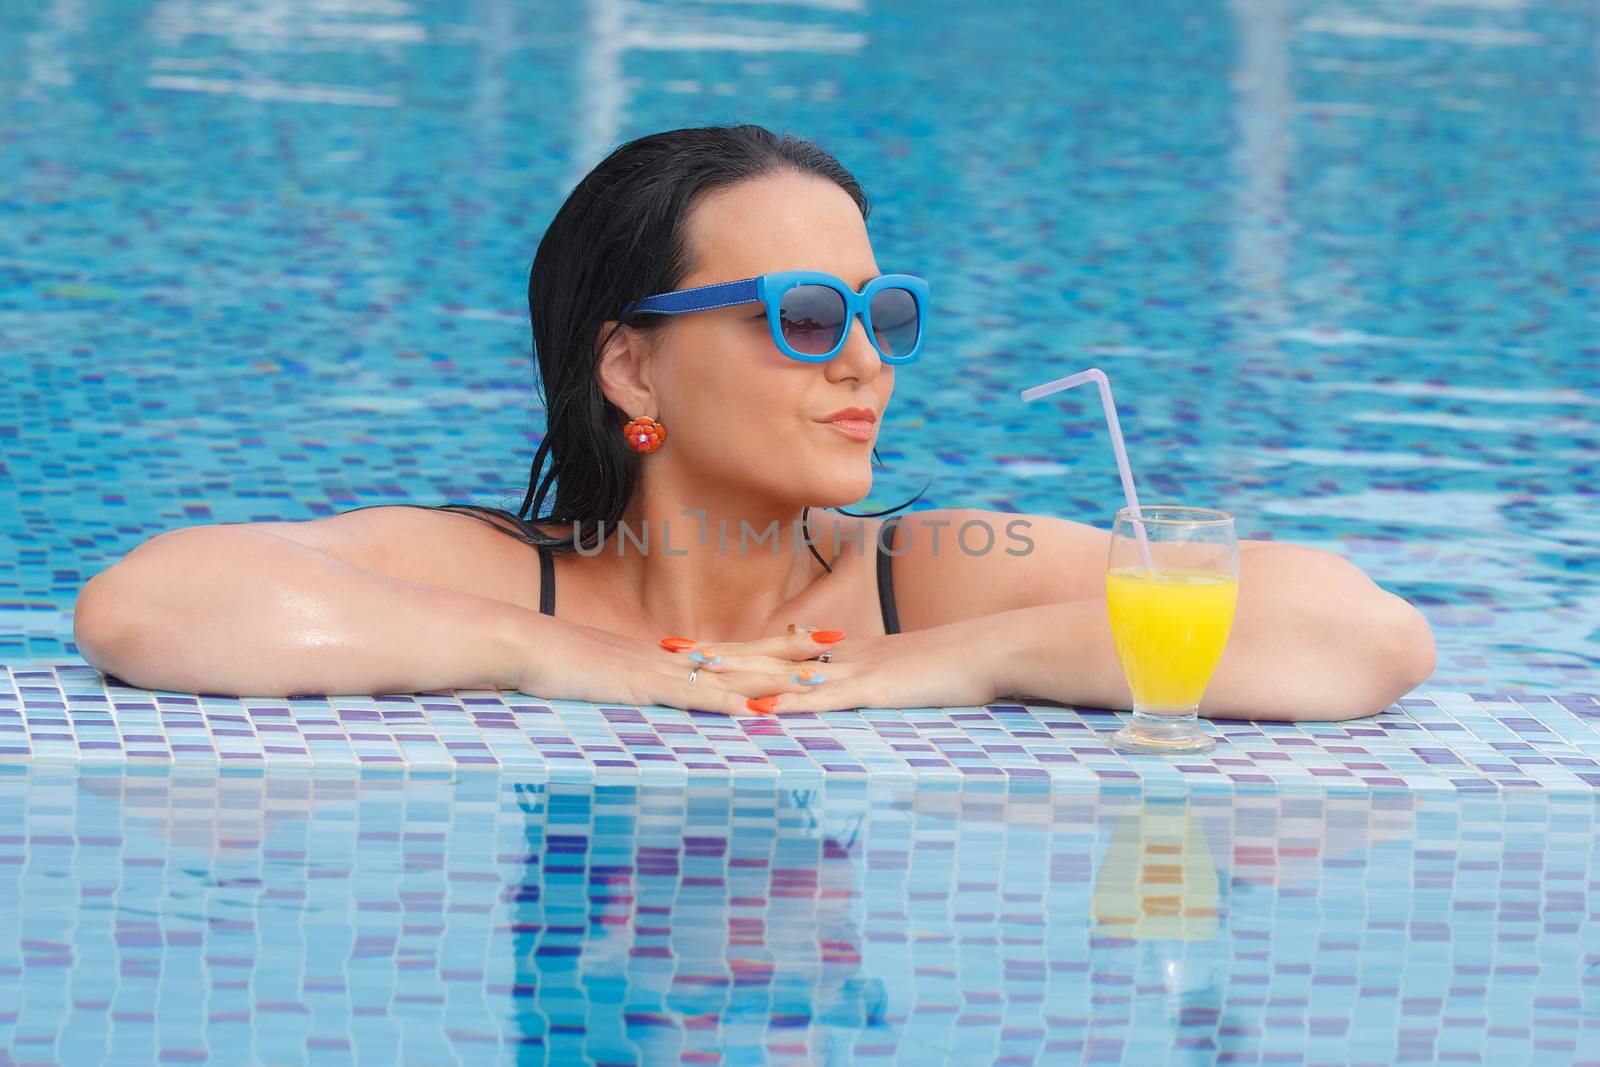 Woman relaxing in swimming pool by Slast20